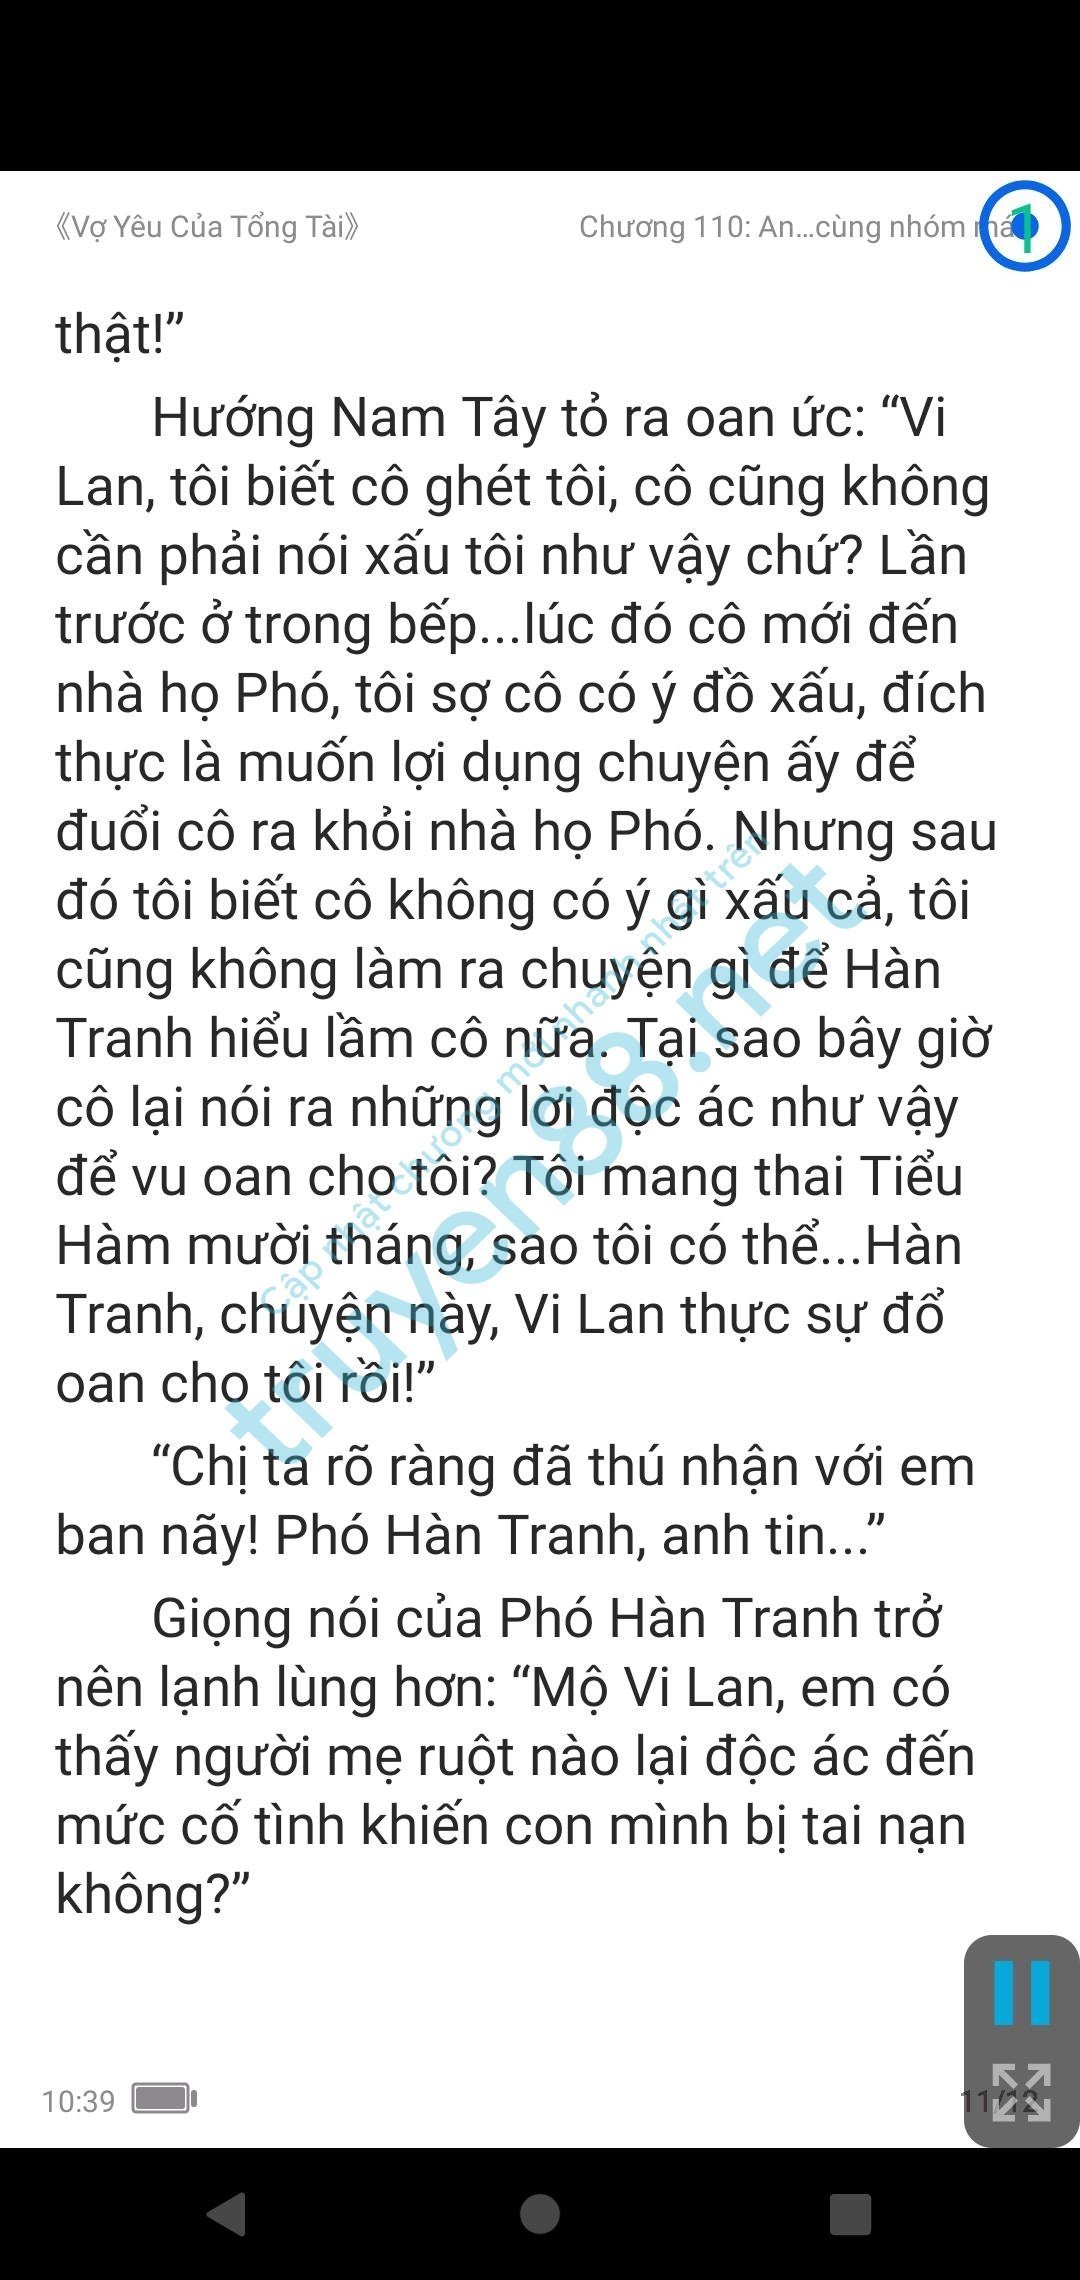 vo-yeu-cua-tong-tai-mo-vi-lan--pho-han-tranh-110-1